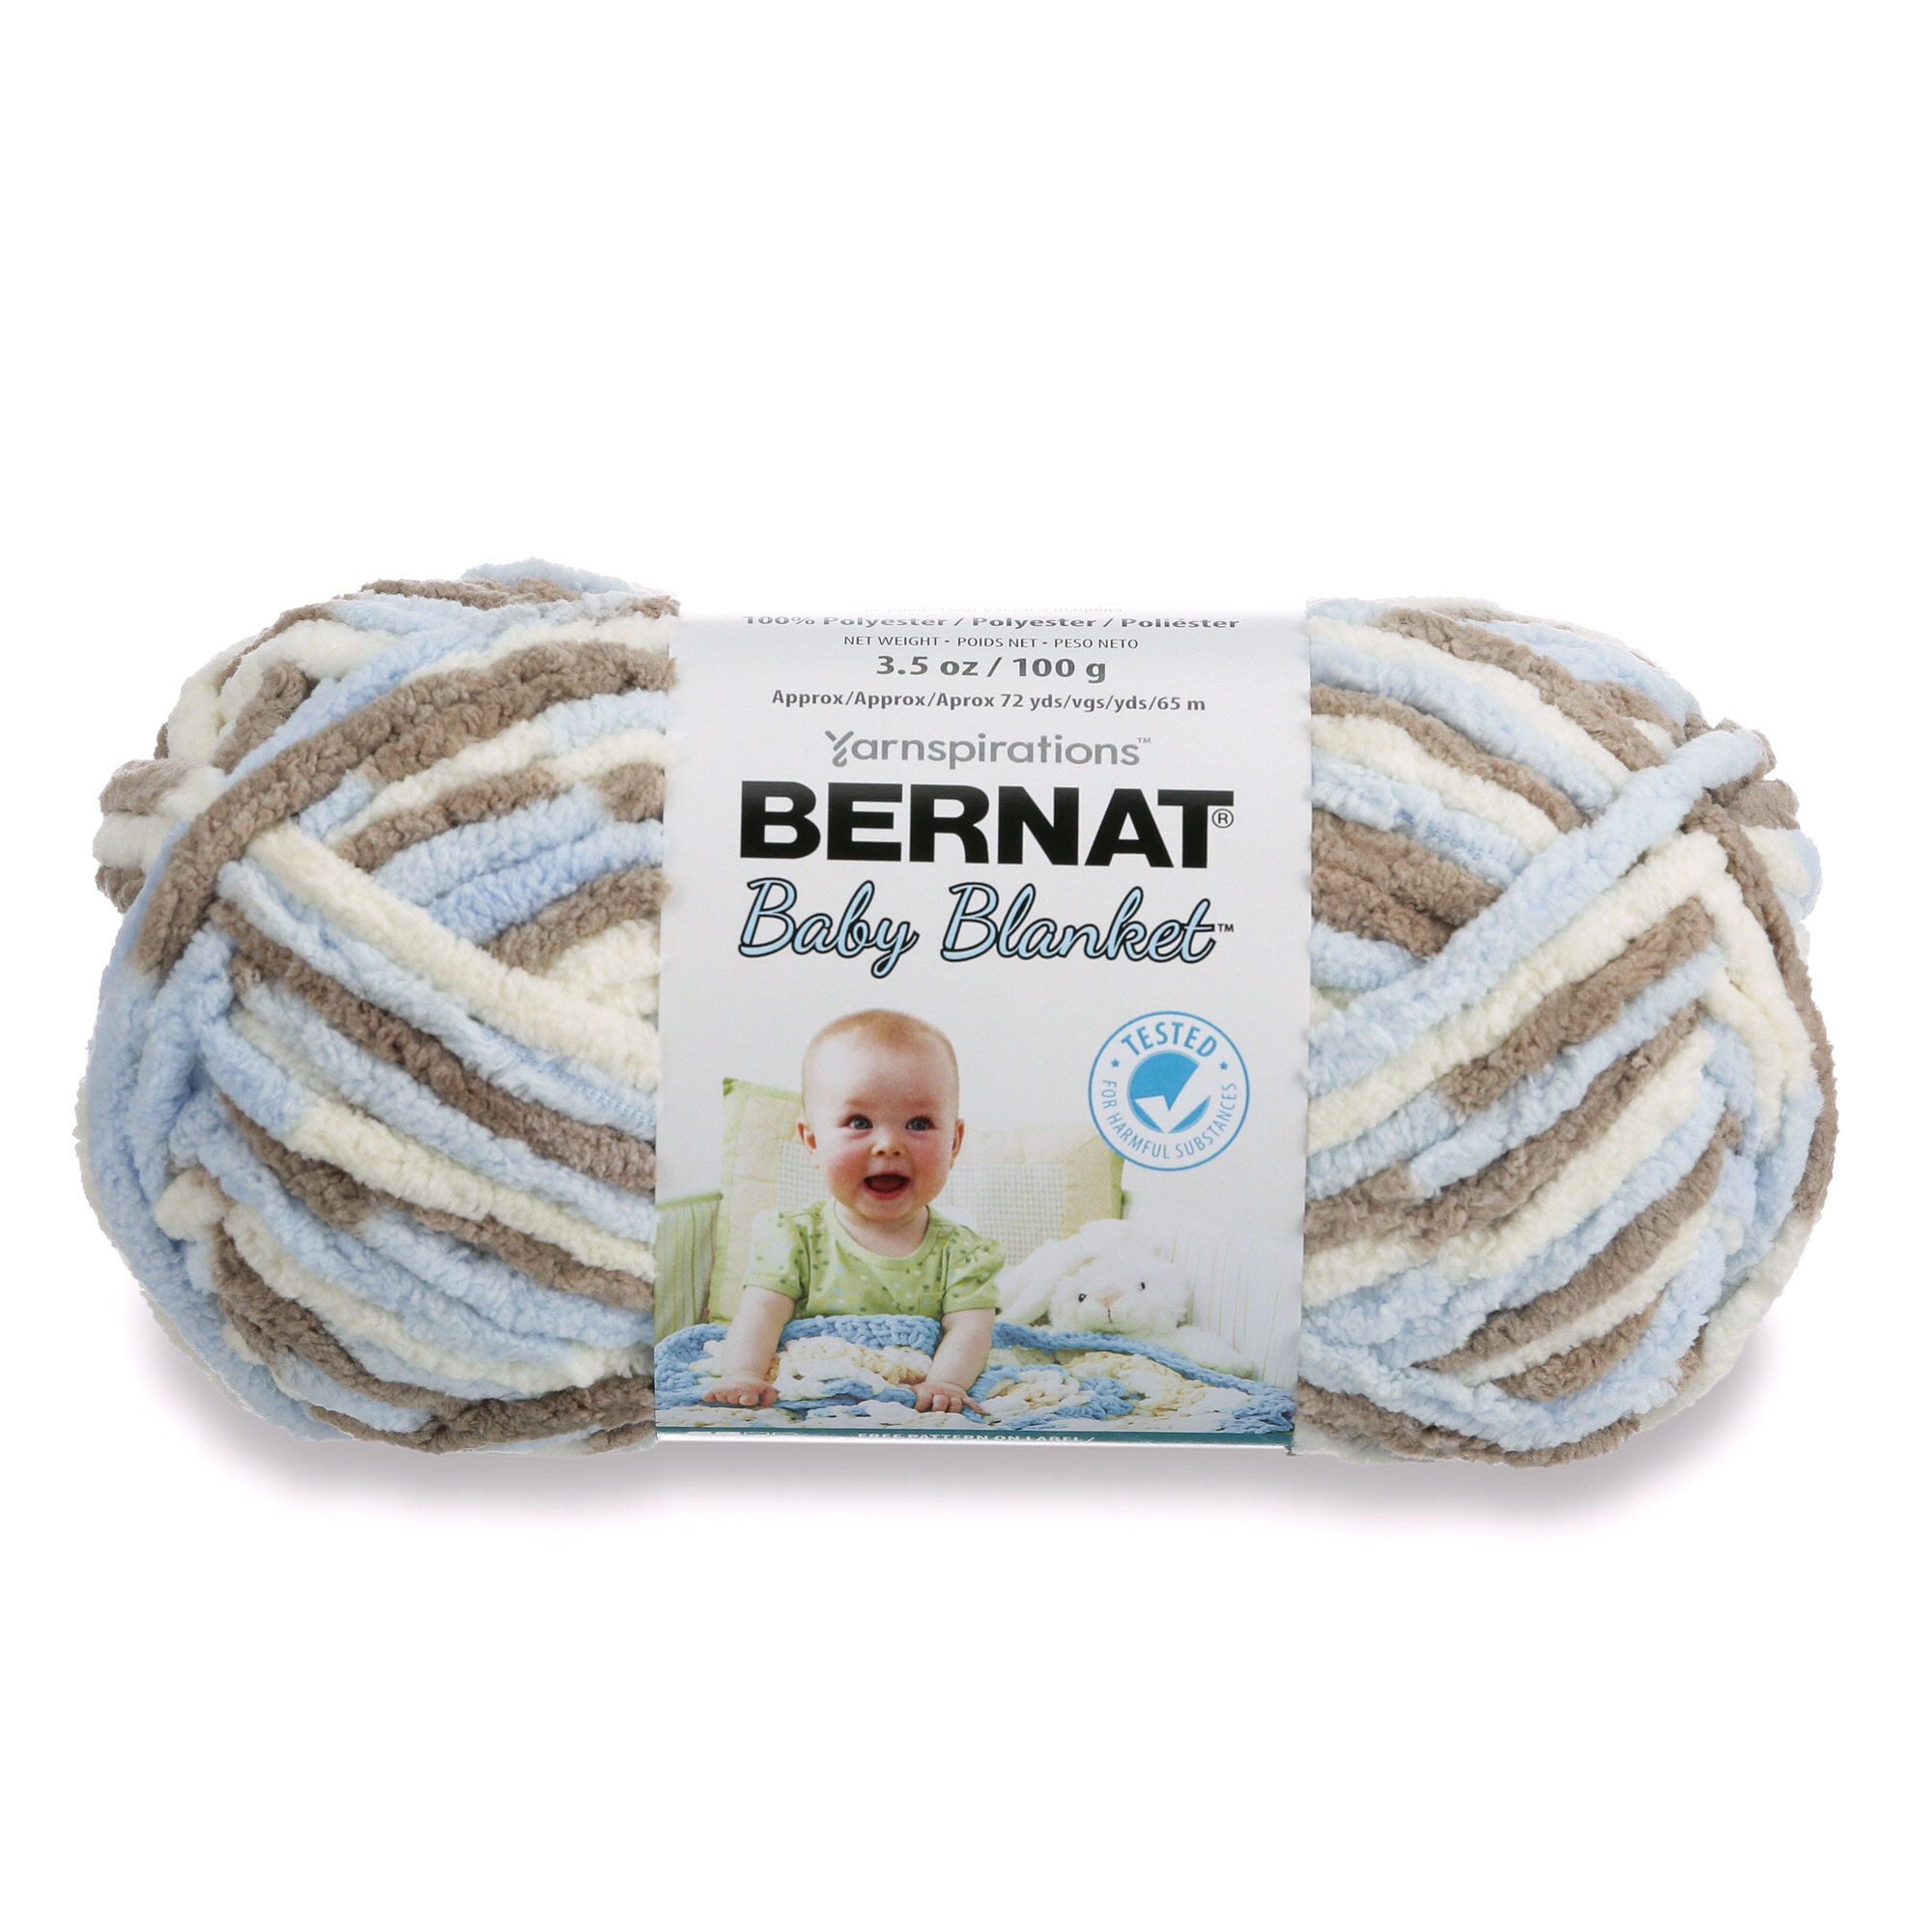 Bernat Baby Blanket Dappled Ever After Pink Yarn - 2 Pack of 300g